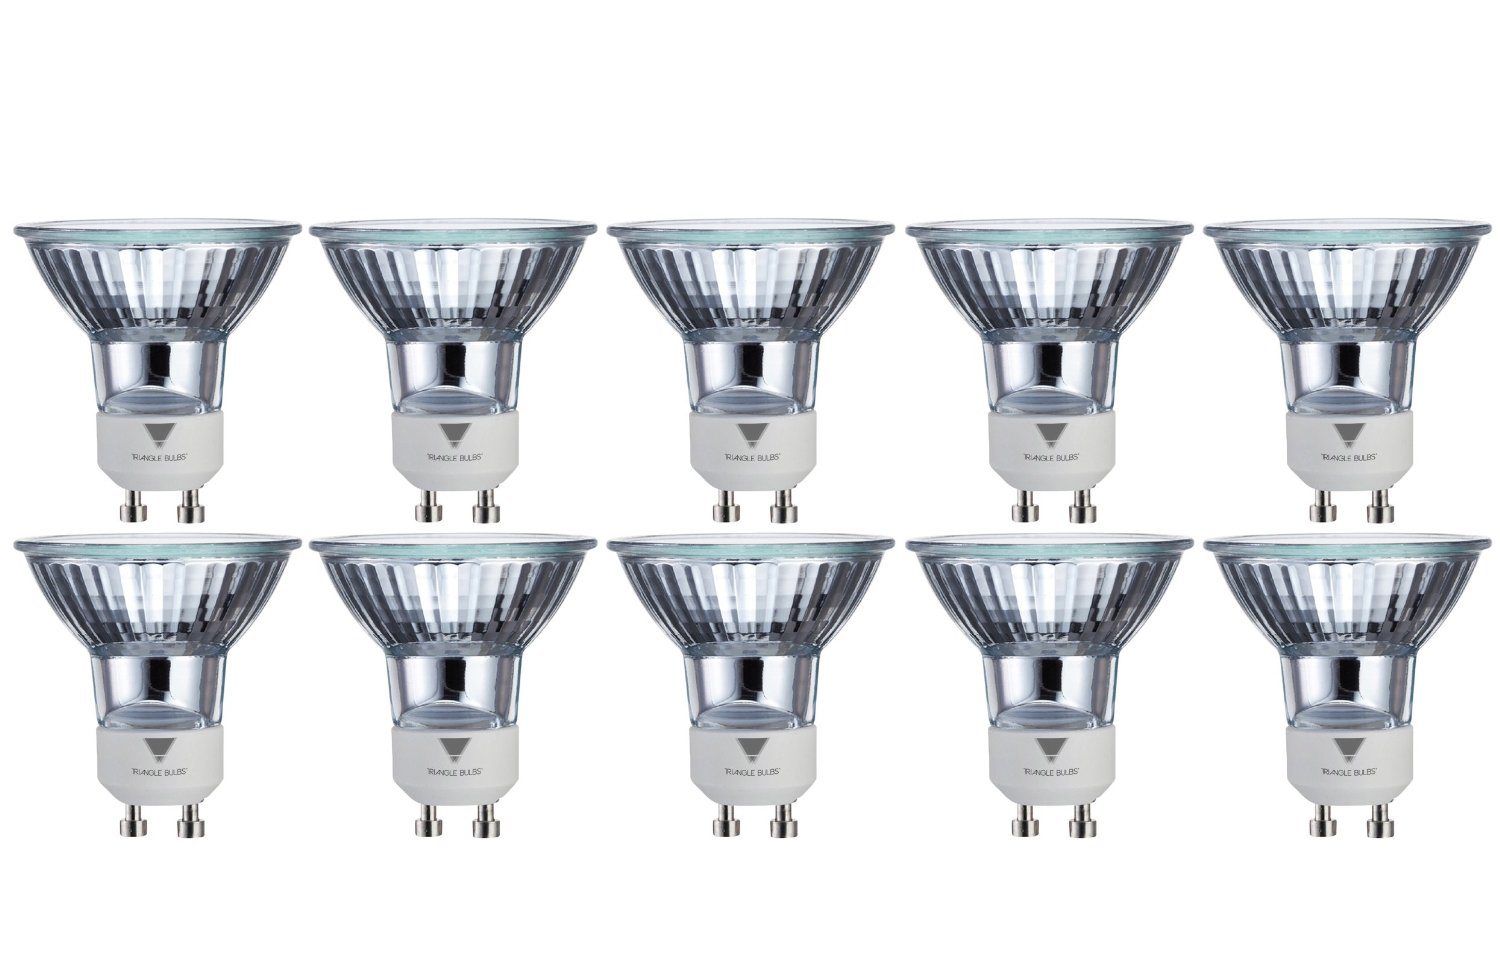 Best Sellertriangle Bulbs 50 Watt, GU10 Base, 120 Volt, MR16 with UV Glass Cover, Halogen Flood Light Bulb, Q50MR16/FL/GU10